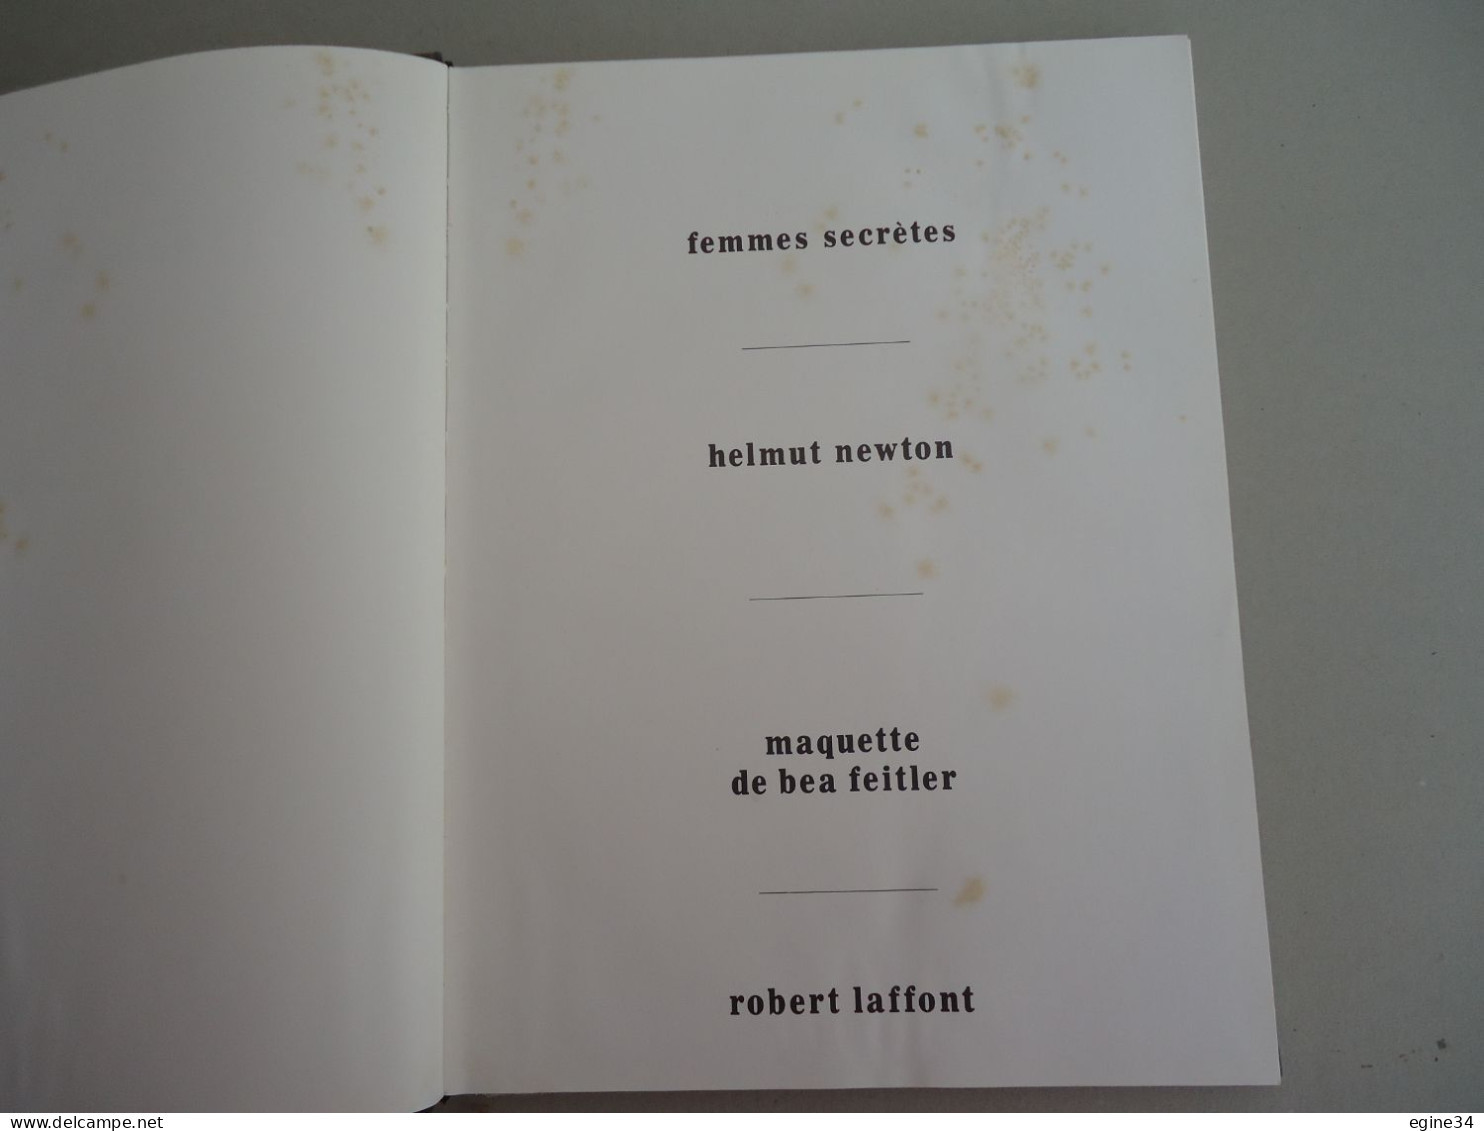 Editions R. Laffont - Helmut Newton - Femmes Secrètes - 1976 - Texte Philippe Garner - Photographs